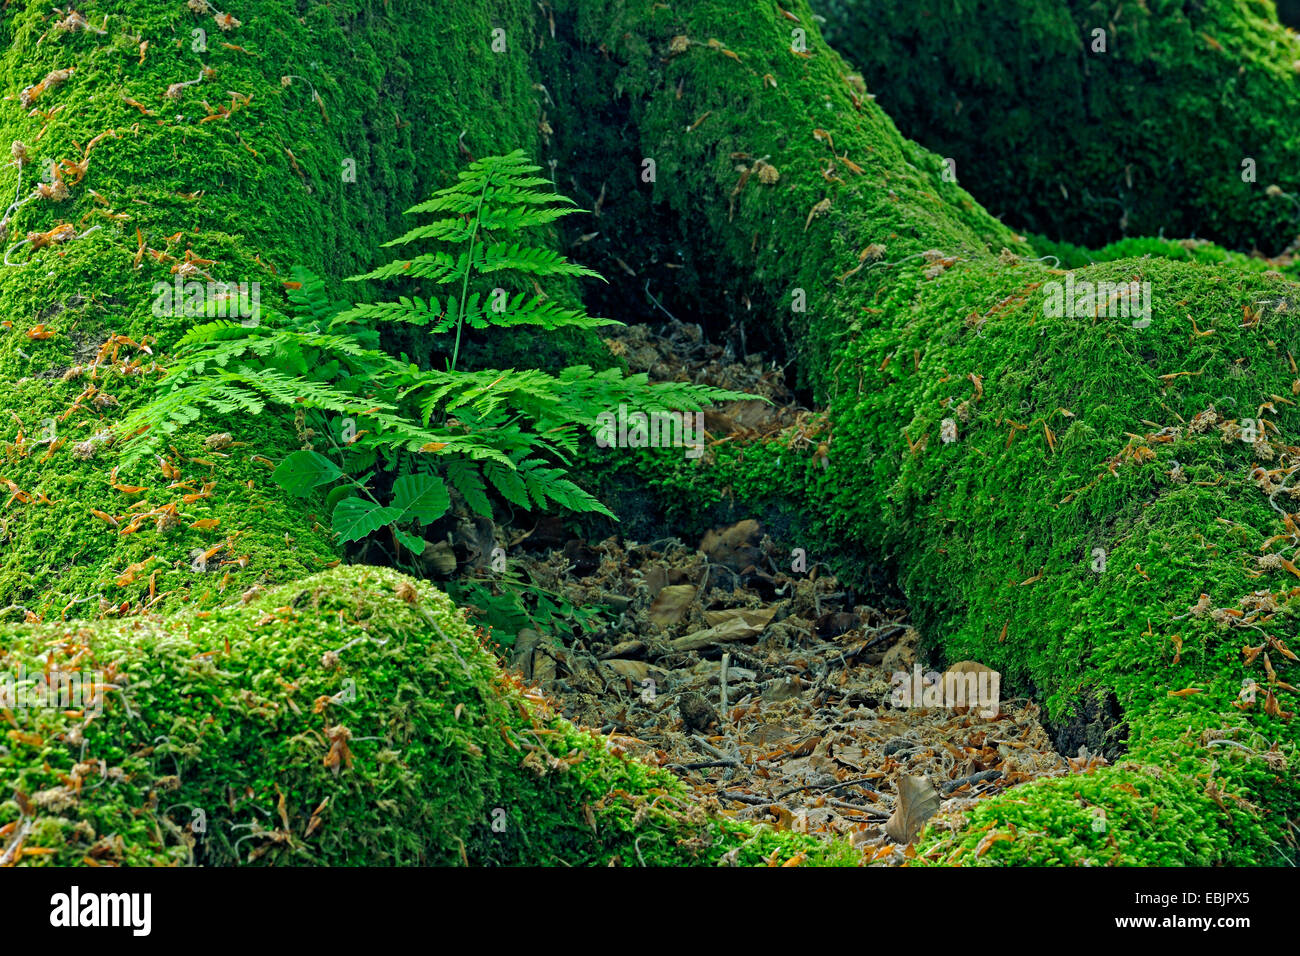 broad buckler-fern (Dryopteris dilatata), fern growing between mossy roots of old beech tree, Germany, Hesse, Urwald Sababurg, Reinhardswald Stock Photo